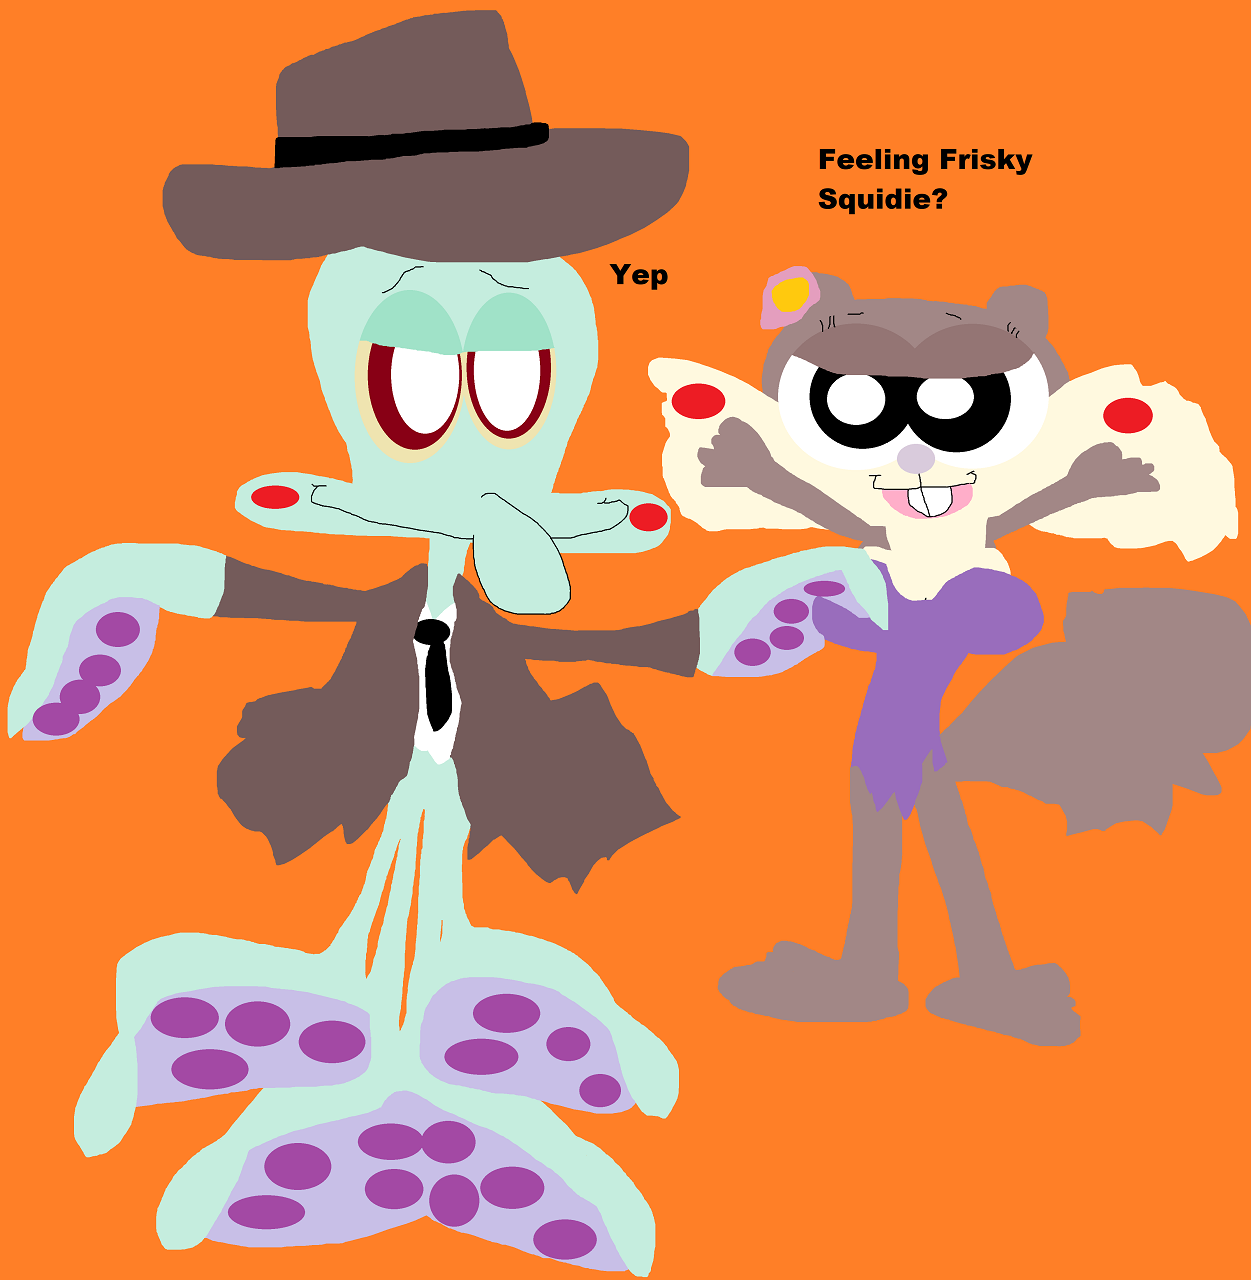 Feeling Frisky Squidie by Falconlobo